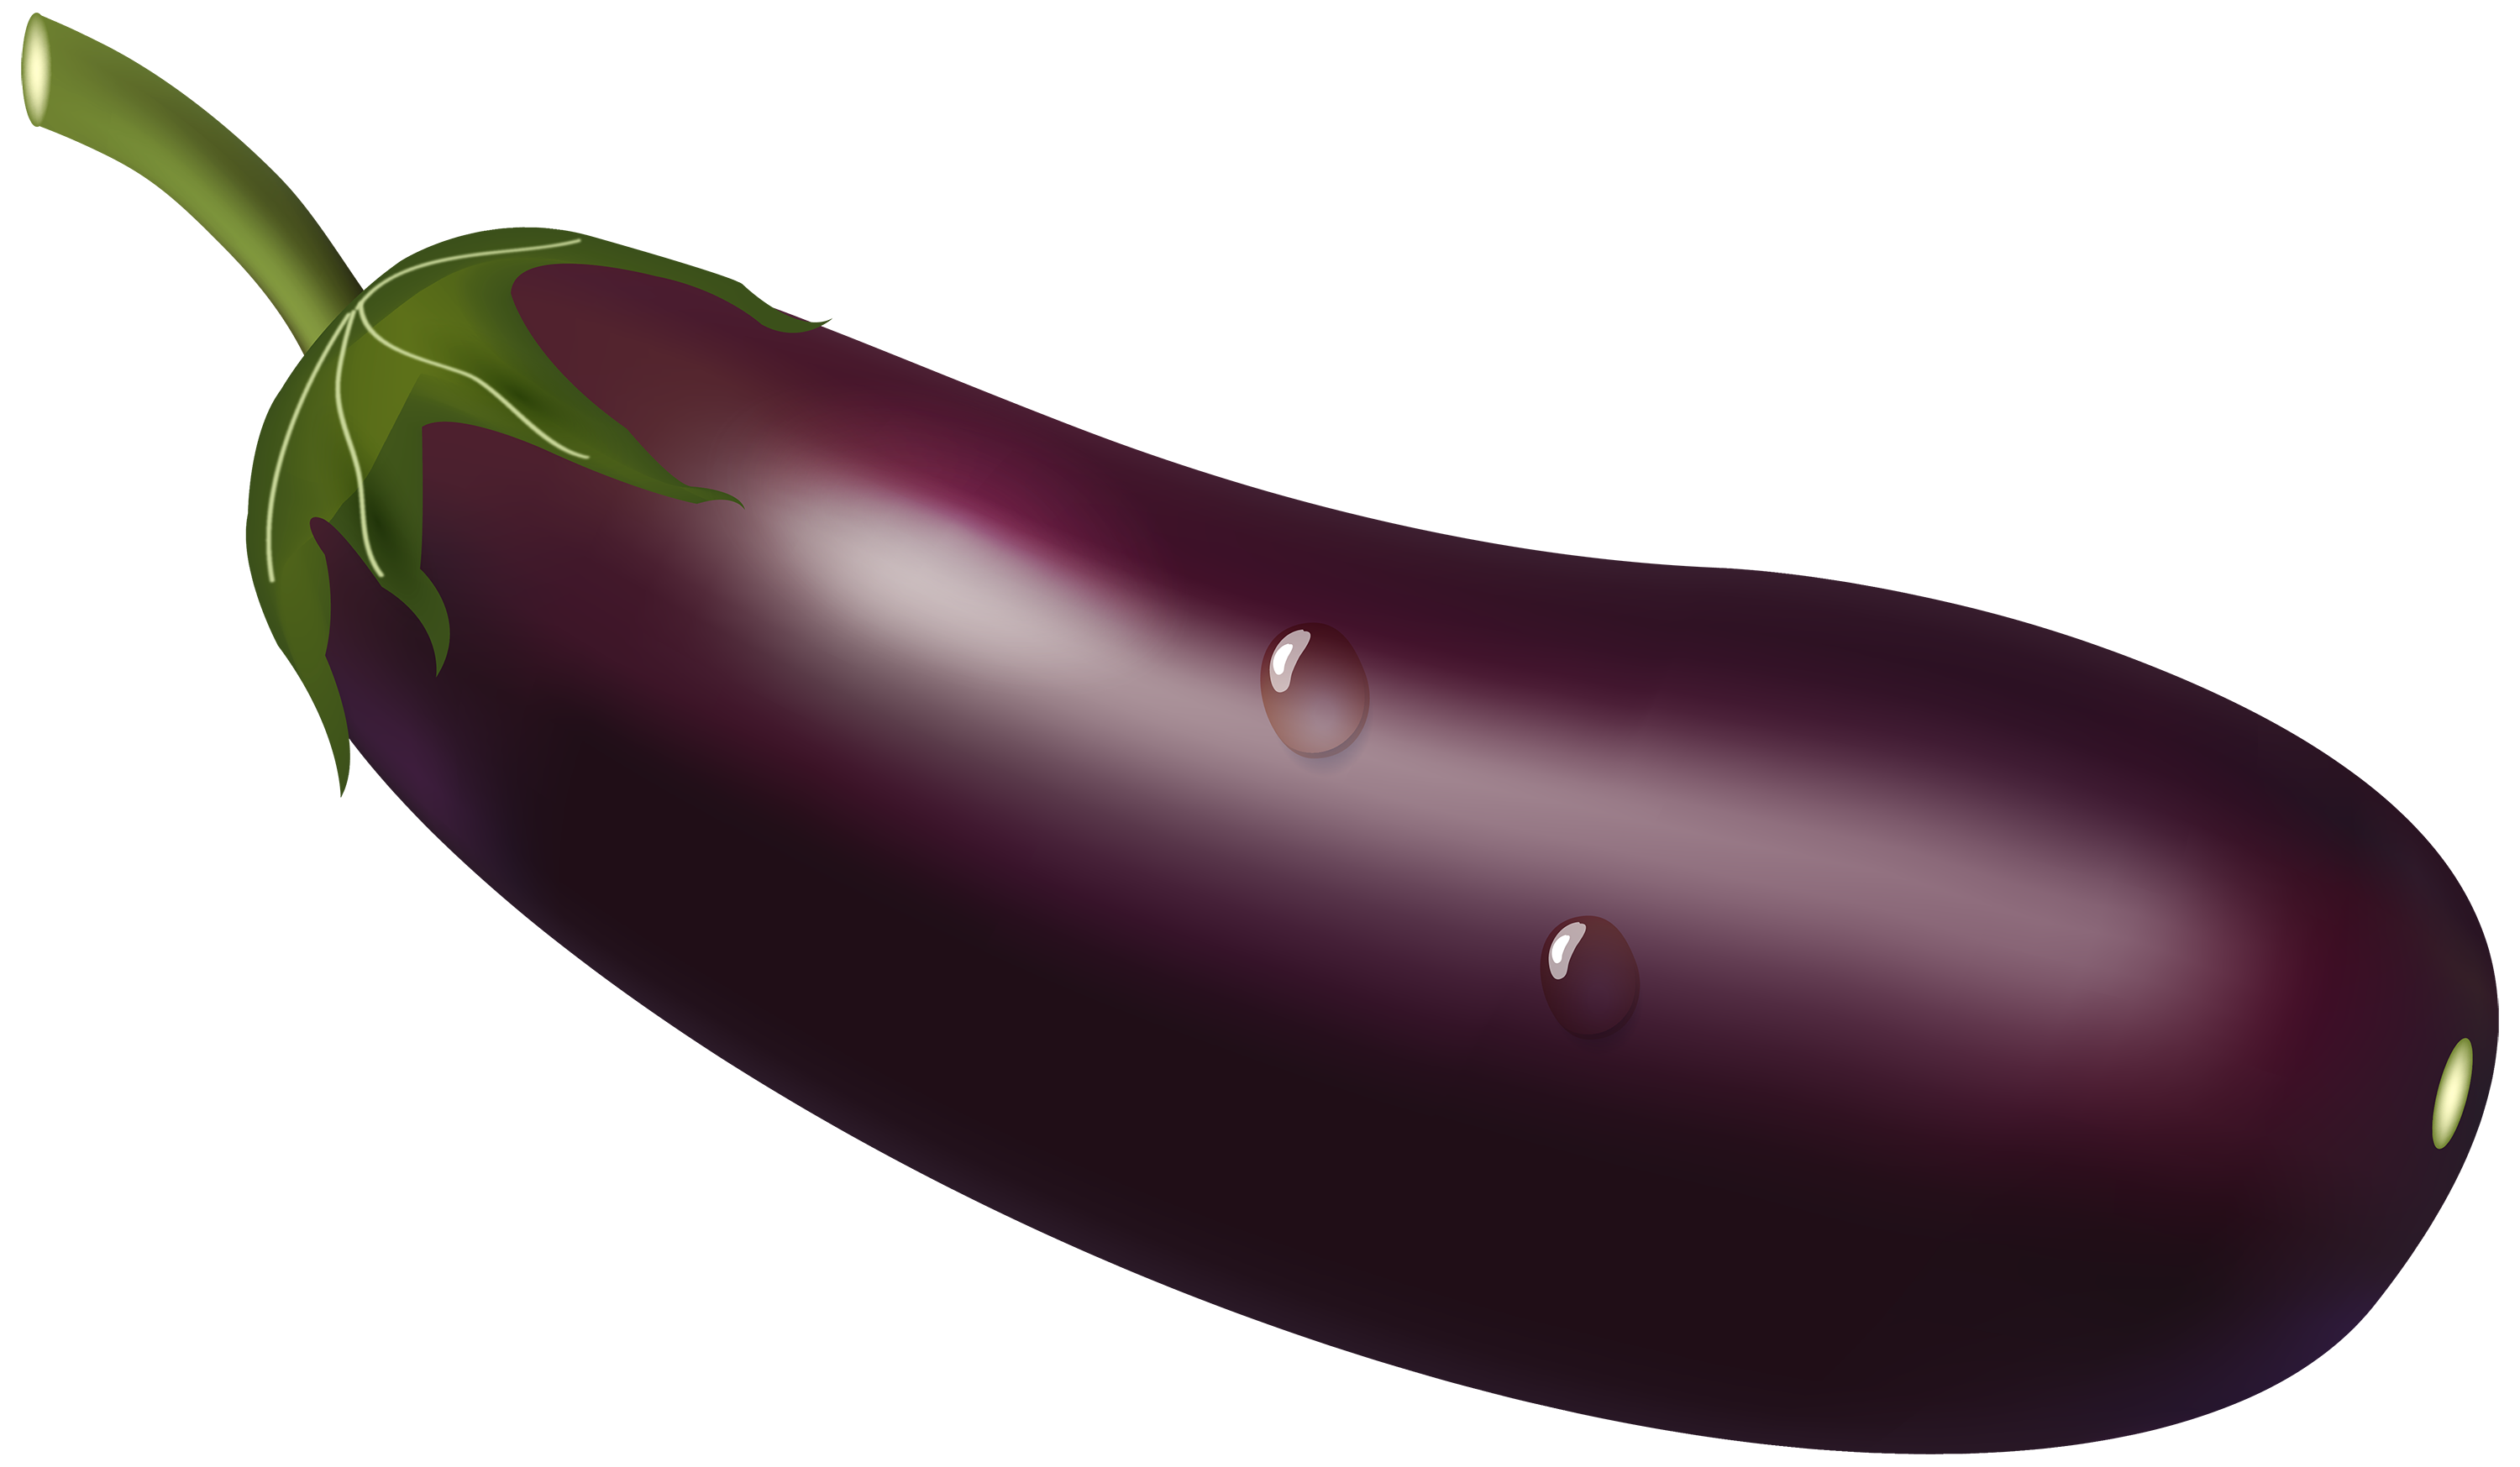 Free Cartoon Eggplant Cliparts, Download Free Cartoon Eggplant Cliparts